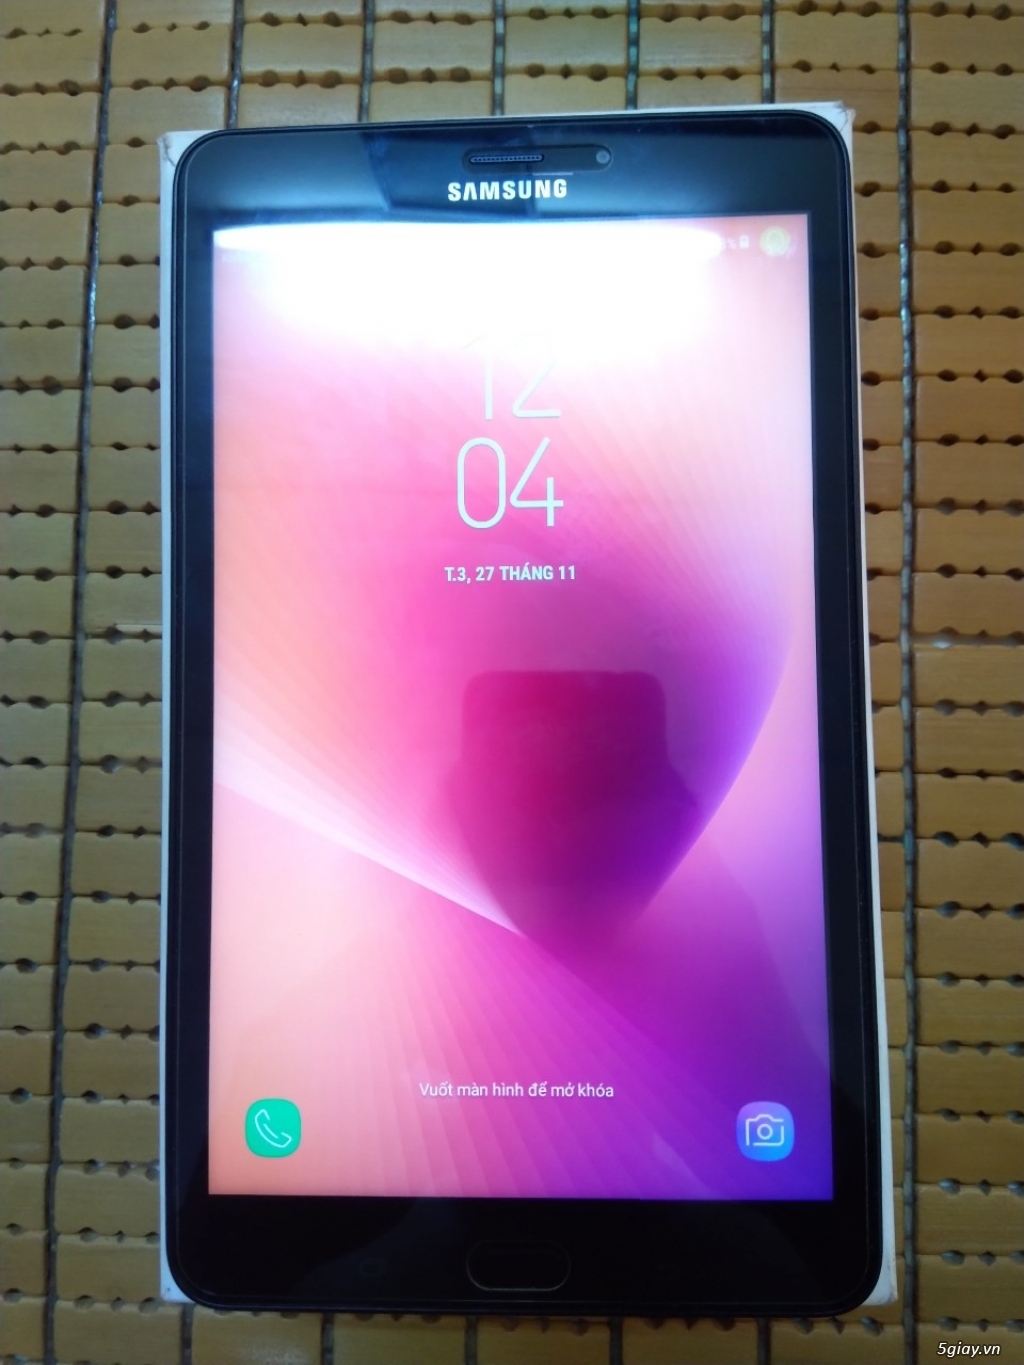 Cần bán: Samsung Galaxy Tab A 8.0 (2017) (TPHCM) - 1